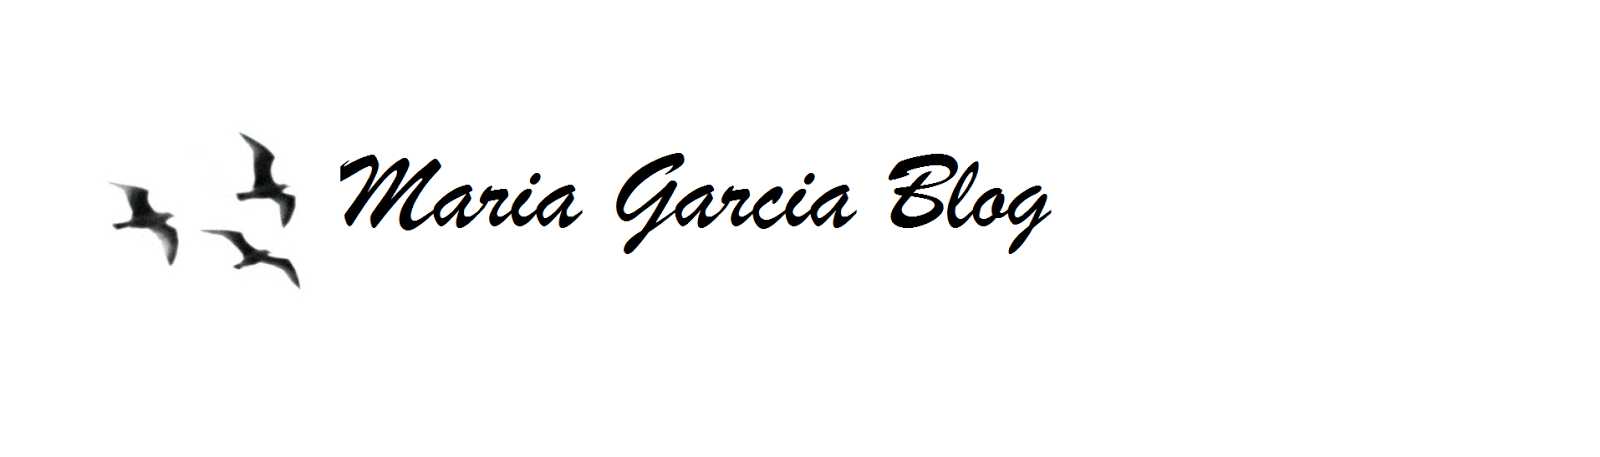 Maria Garcia Blog